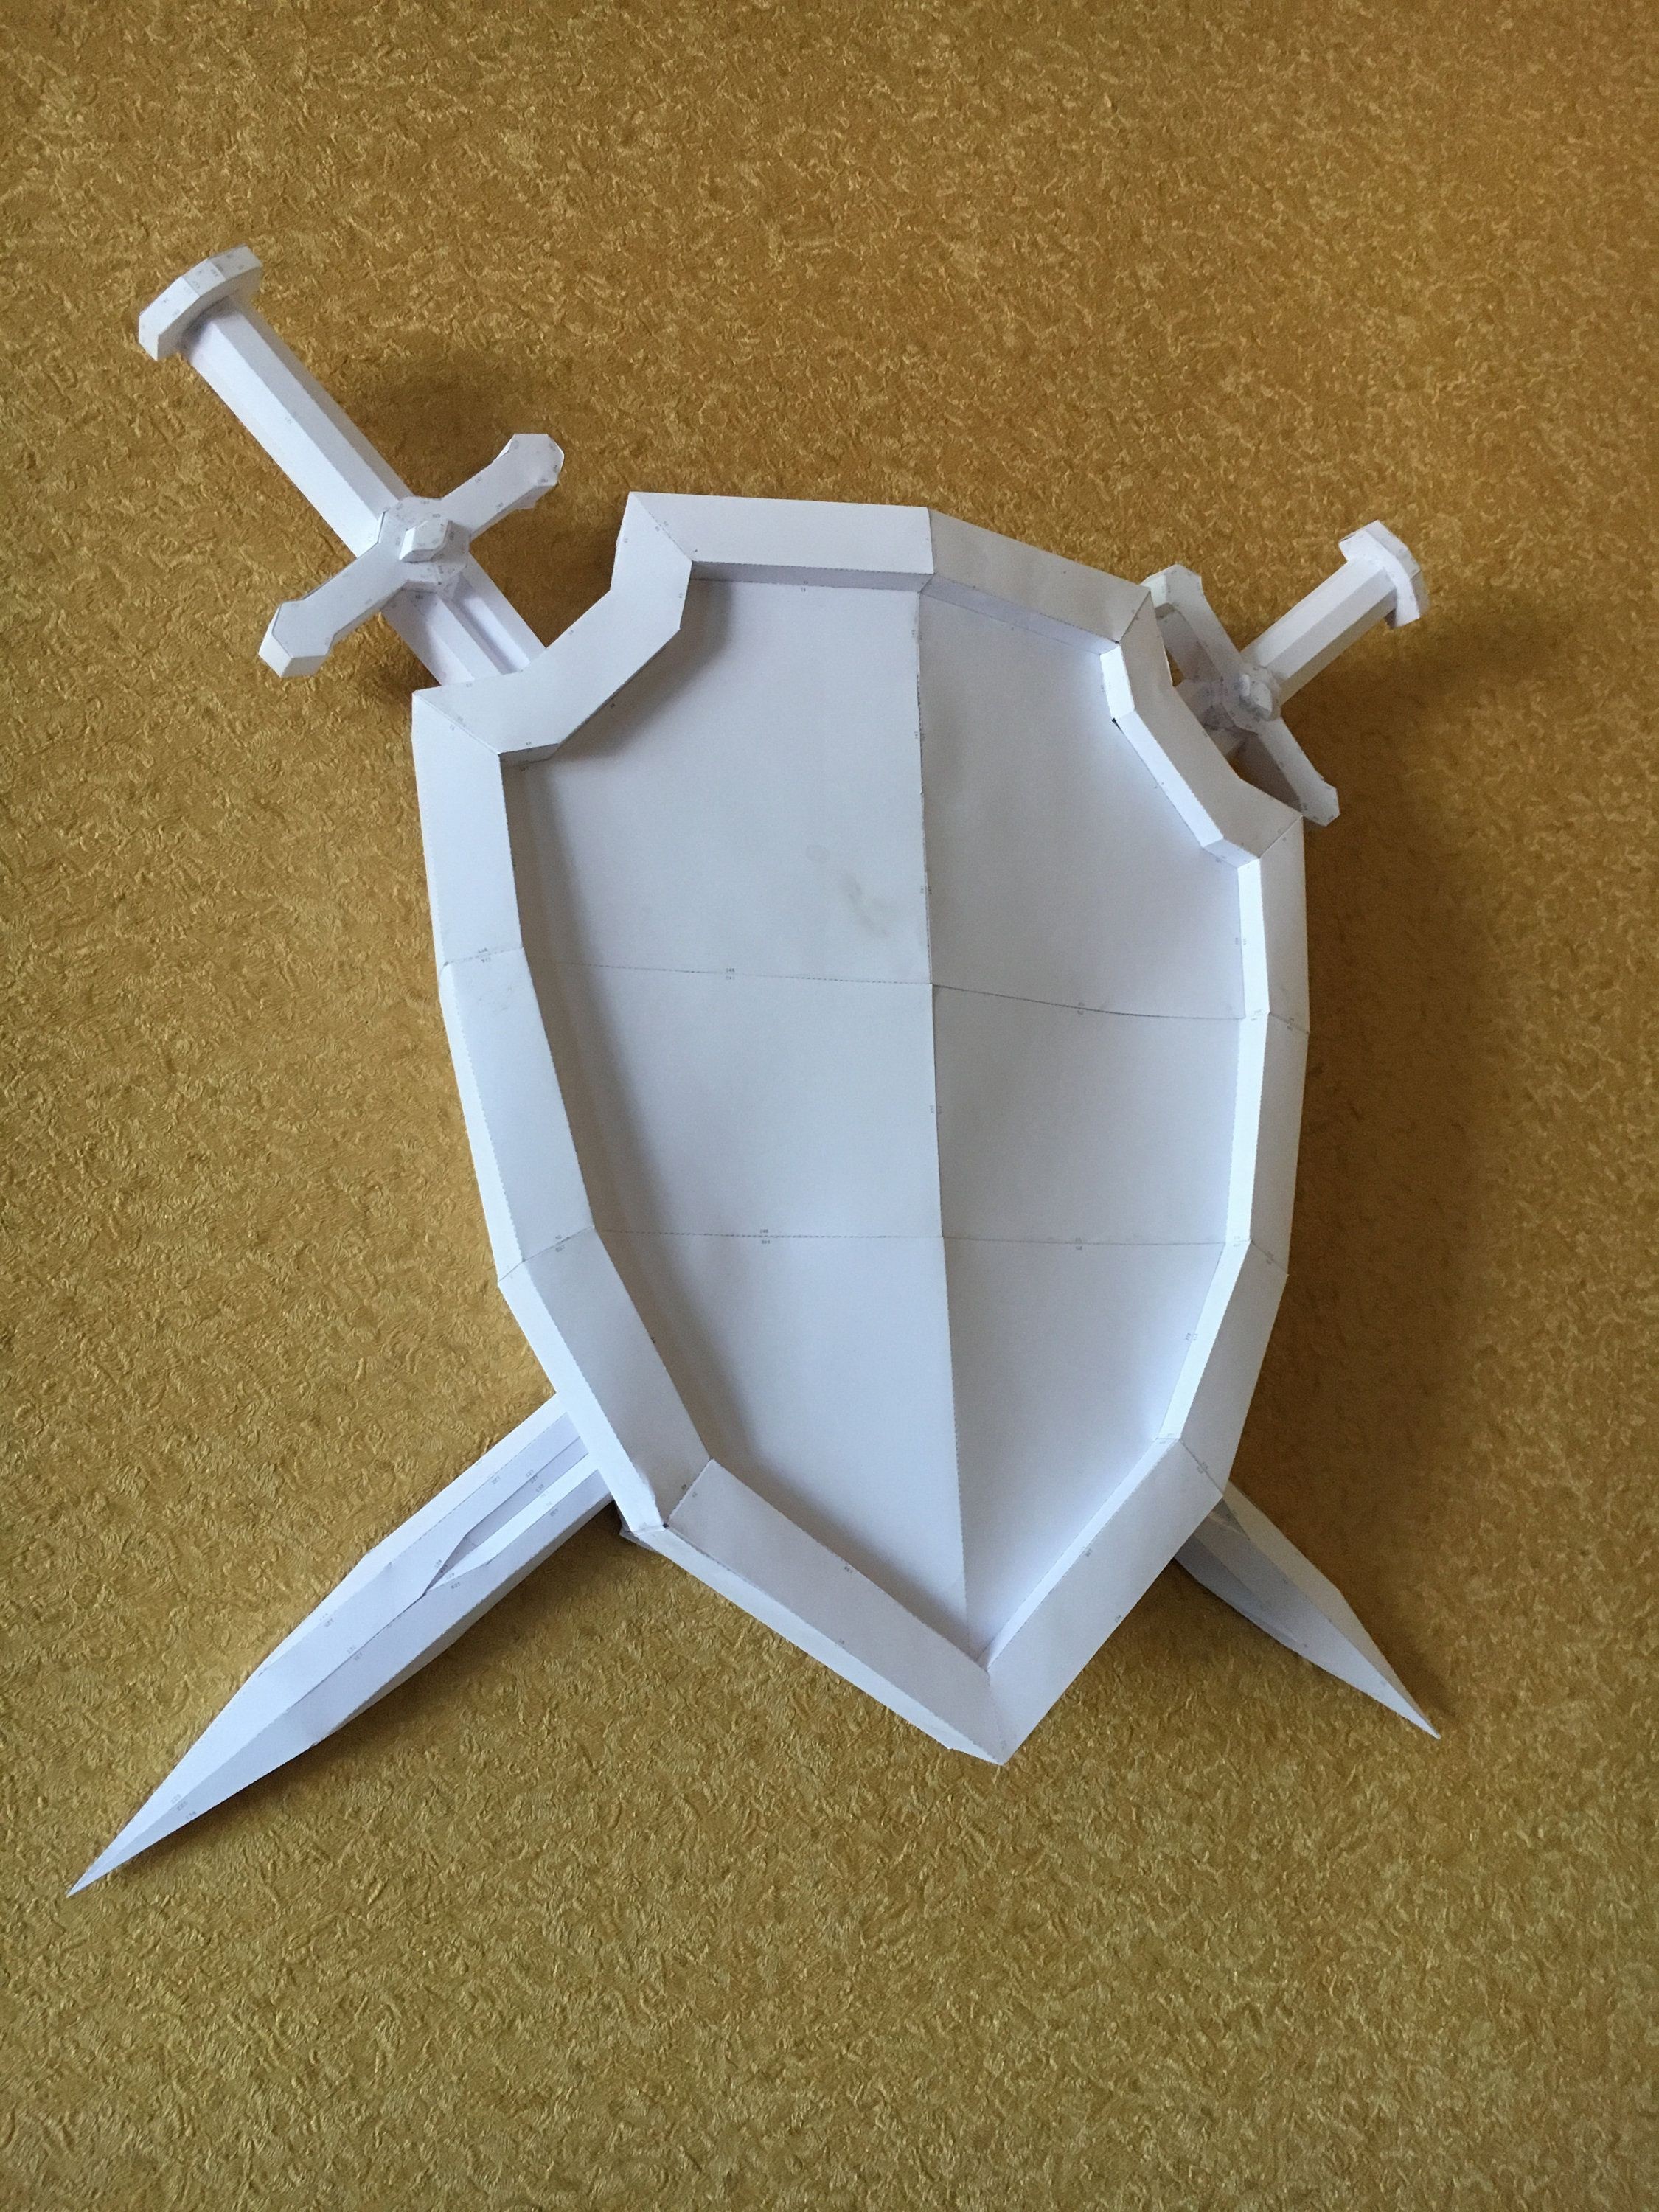 Papercraft Monkey Sword Shield Diy Papercraft Model ÐÑÐ¼Ð°Ð¶Ð½ÑÐµ Ð¸Ð·Ð´ÐµÐ Ð¸Ñ